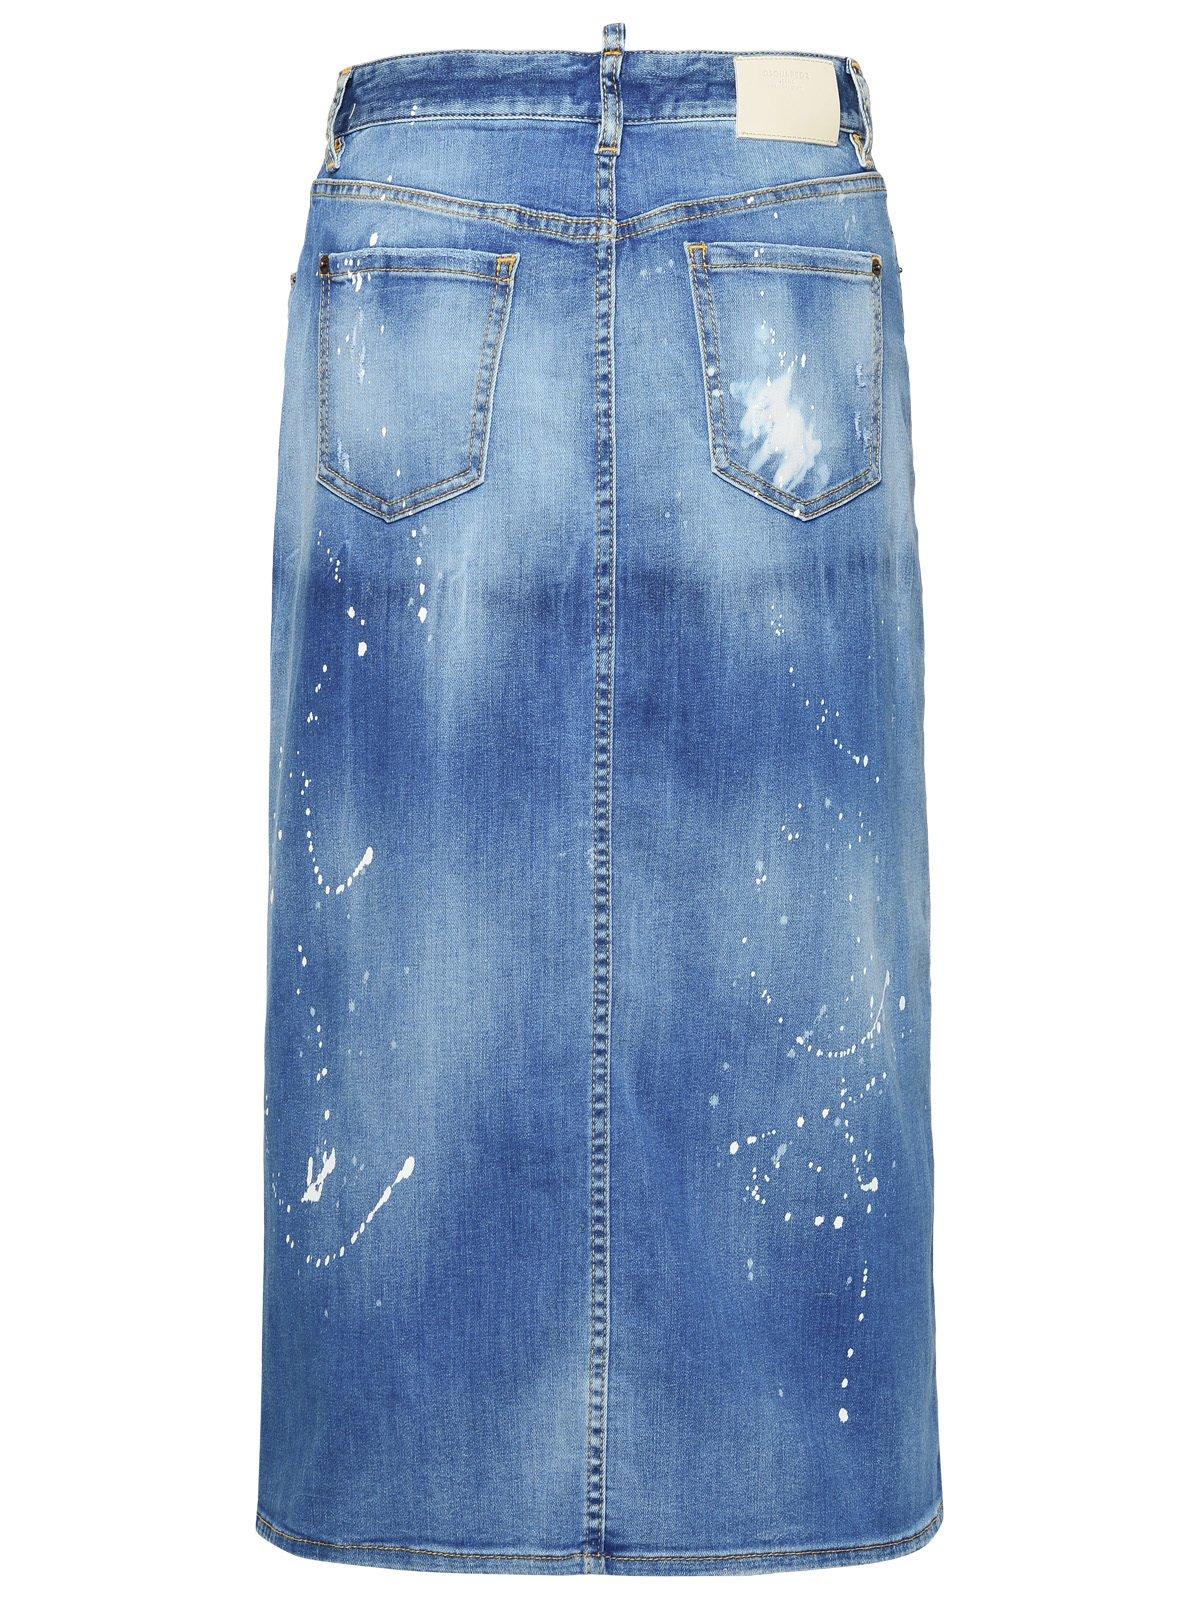 REDDACHiC Blue Wash High Waist Long Jeans Skirt Plain Casual Loose Frayed Distressed  Denim Midi Skirt